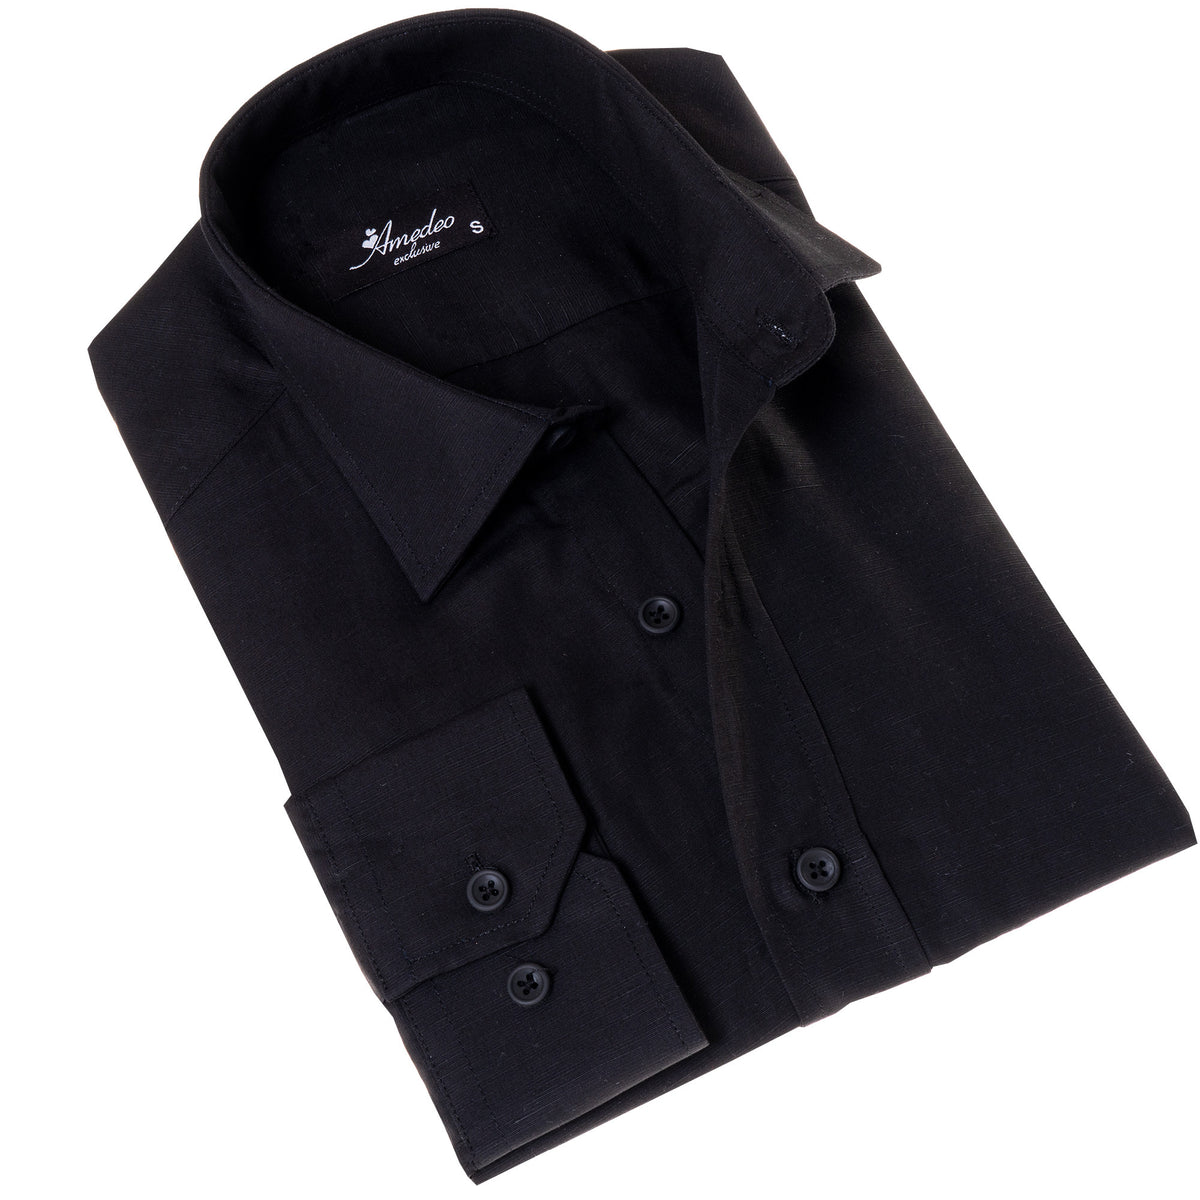 Black Luxury Men's Tailor Fit Button Up European Made Linen Shirts